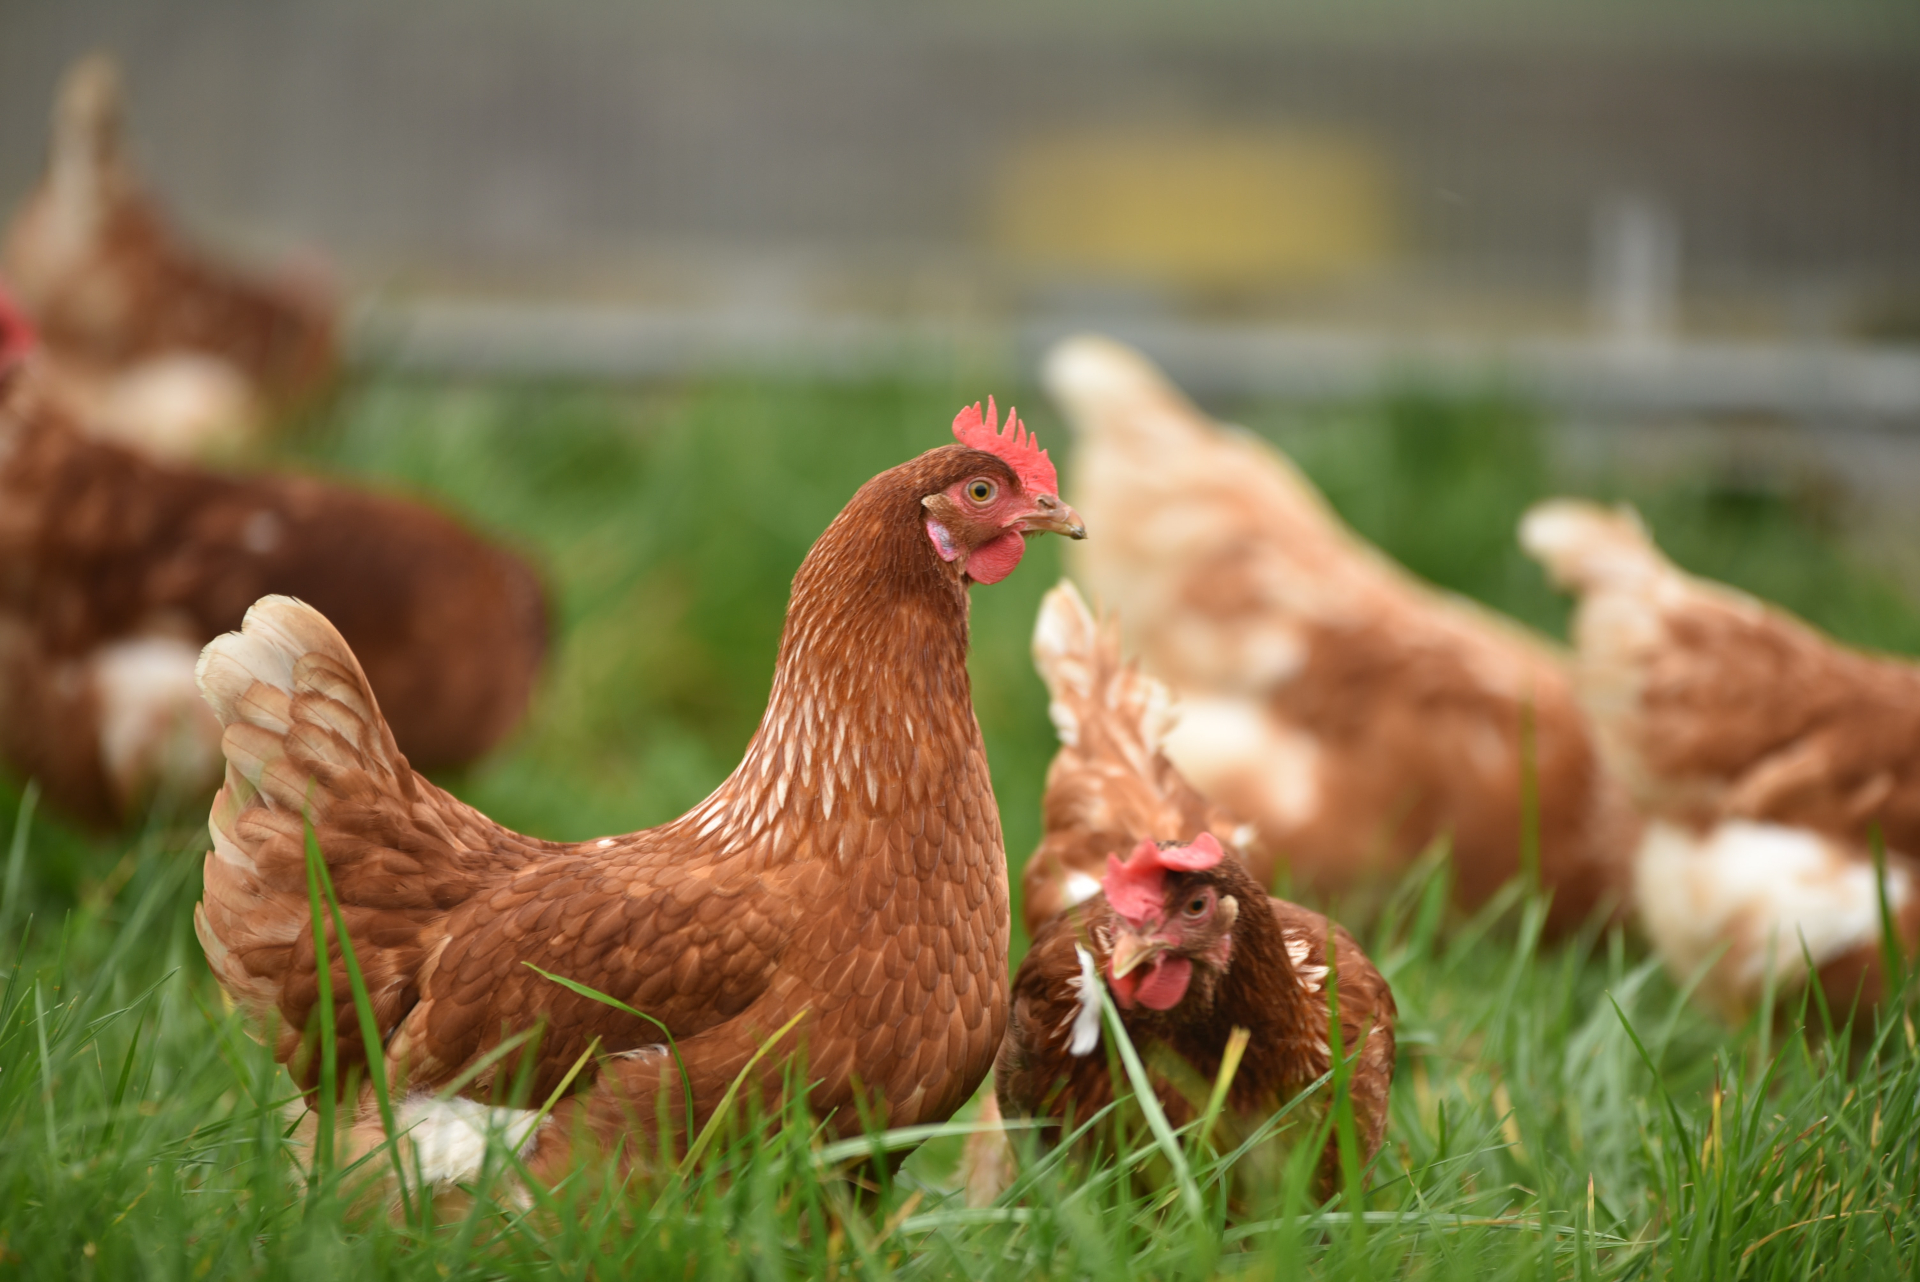 Chickens in grass field